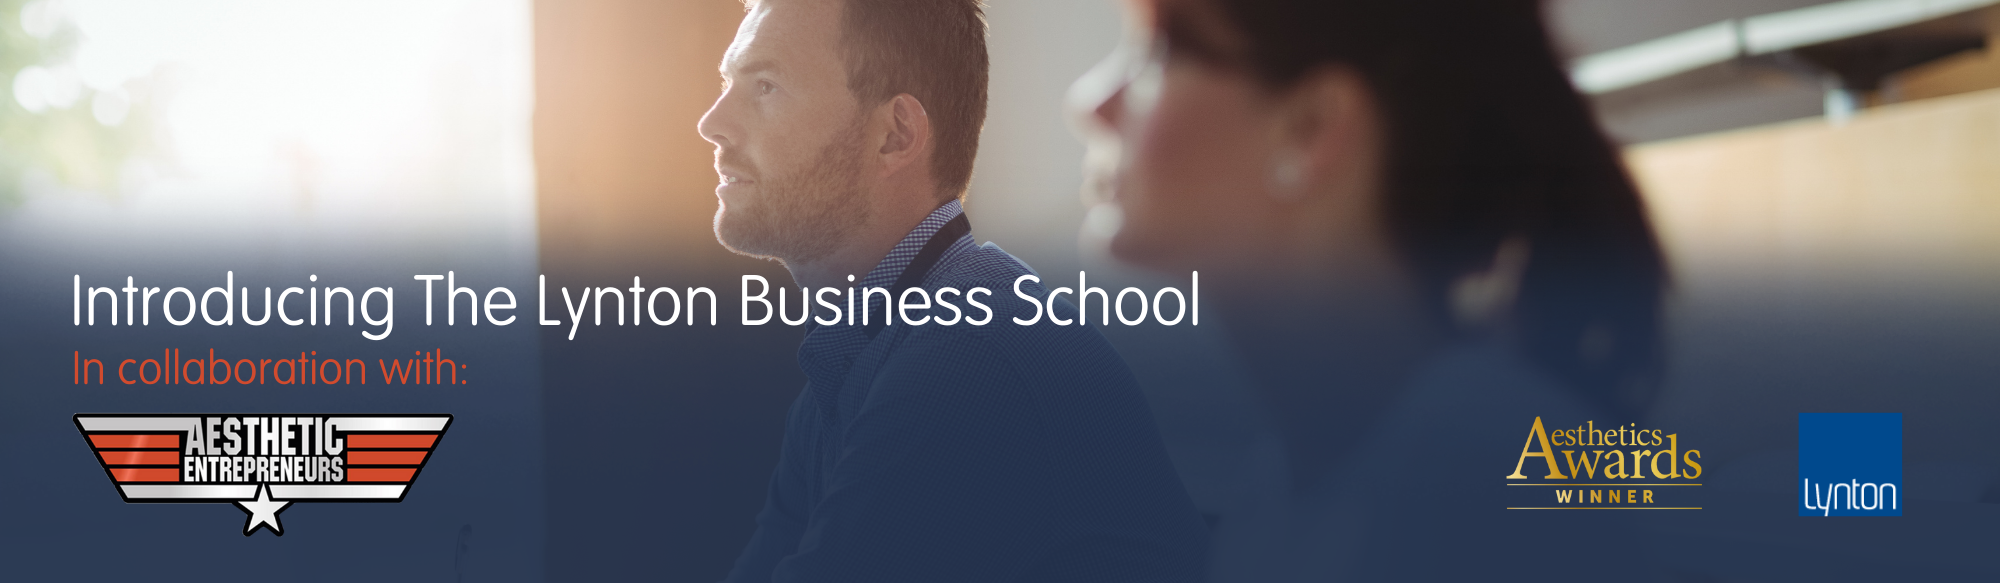 Lynton business school web banner 